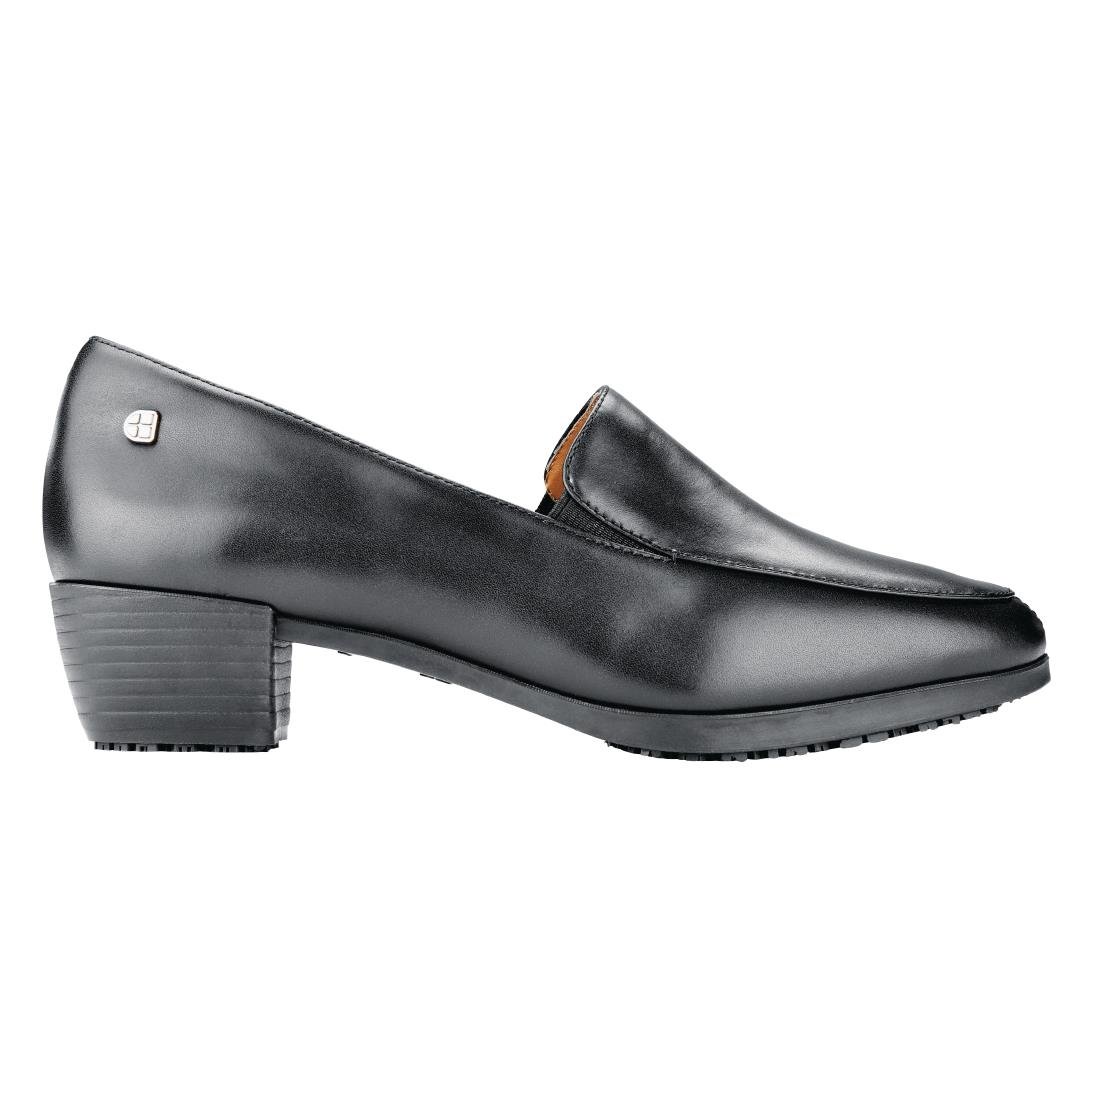 BB605-40 Shoes for Crews Envy Slip On Dress Shoe Black Size 40